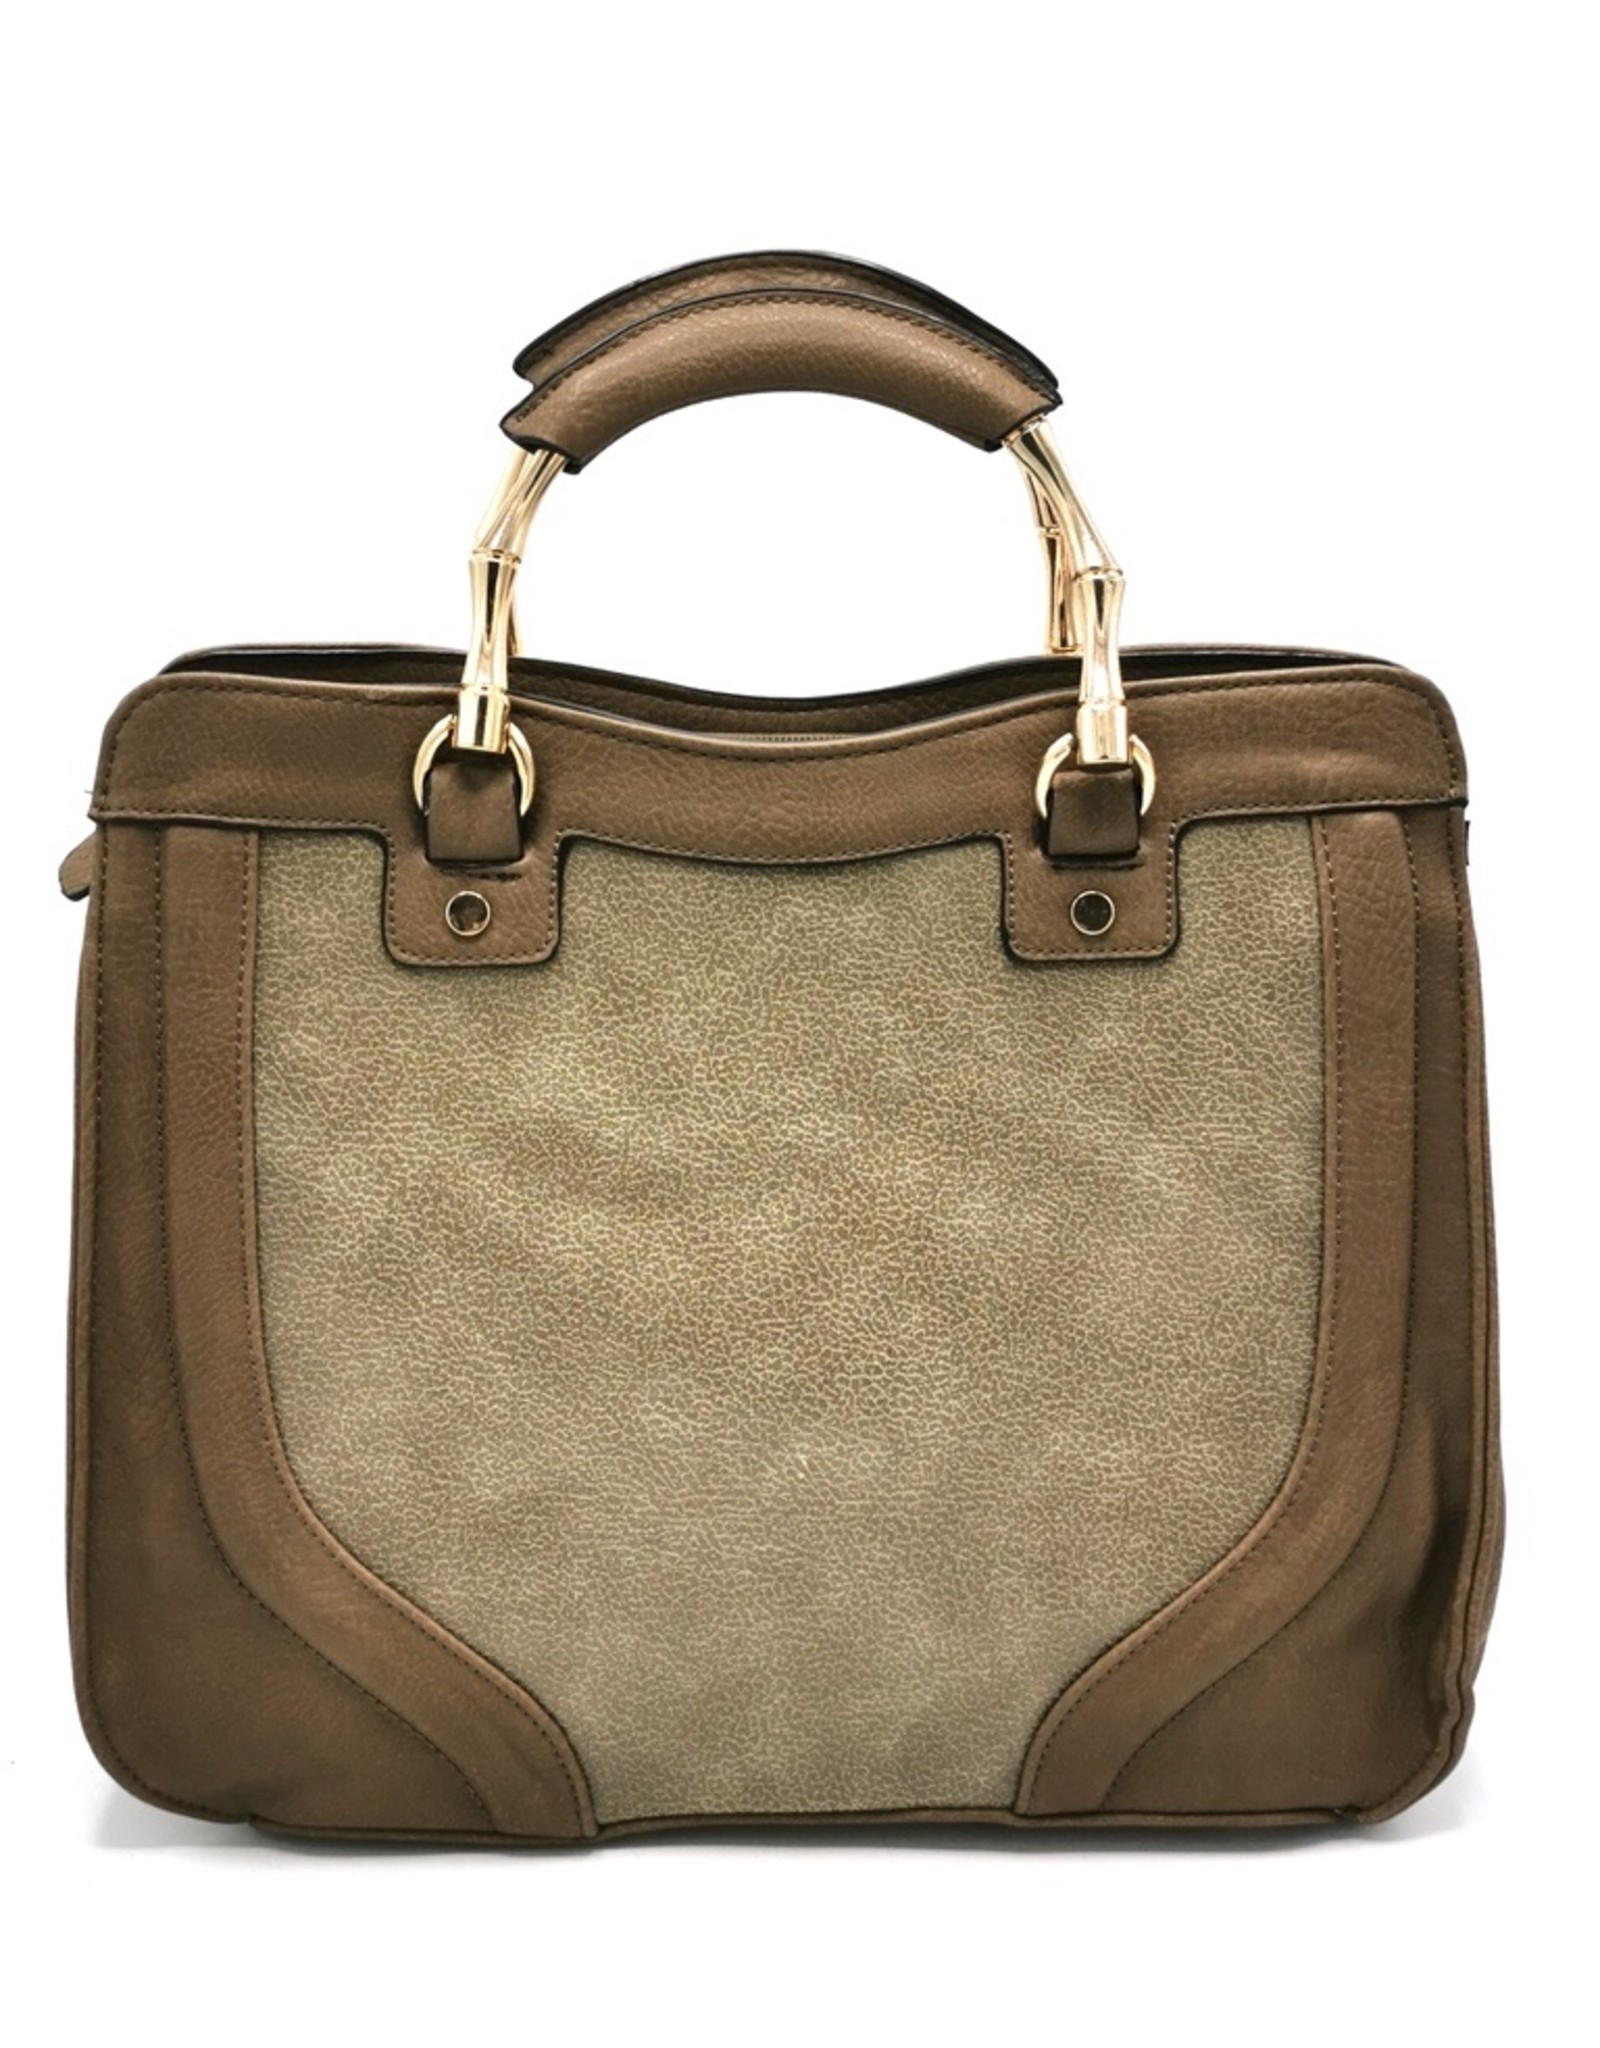 Trukado Fashion bags - Vintage Handbag with Golden Bamboo handles